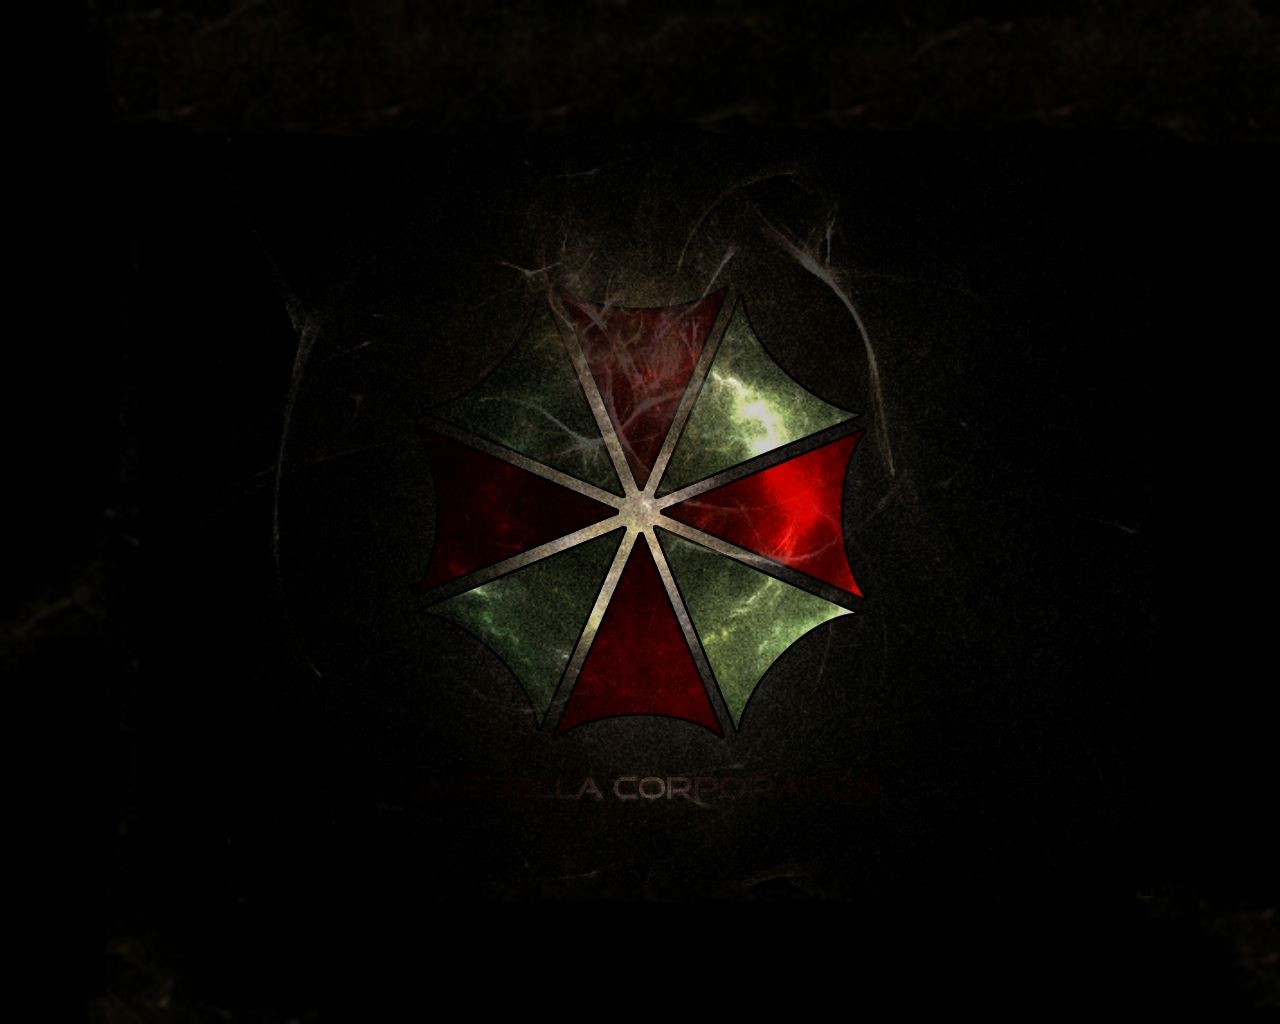 Resident evil umbrella corp logos movies video games wallpaper ...